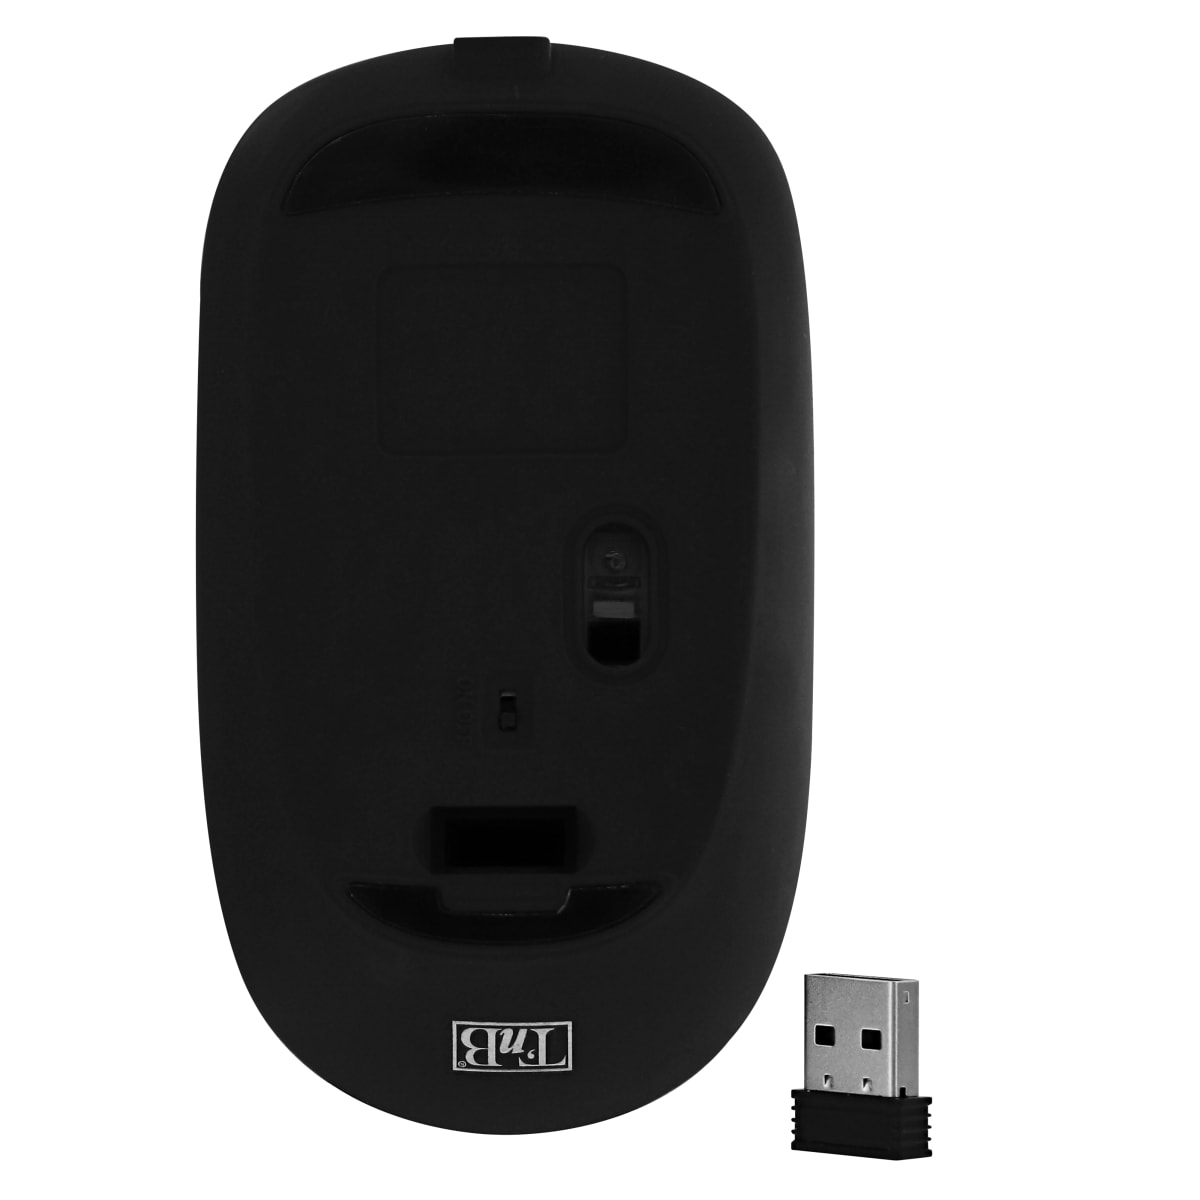 Souris sans fil USB silencieuse Rubby TNB - Vert - JPG